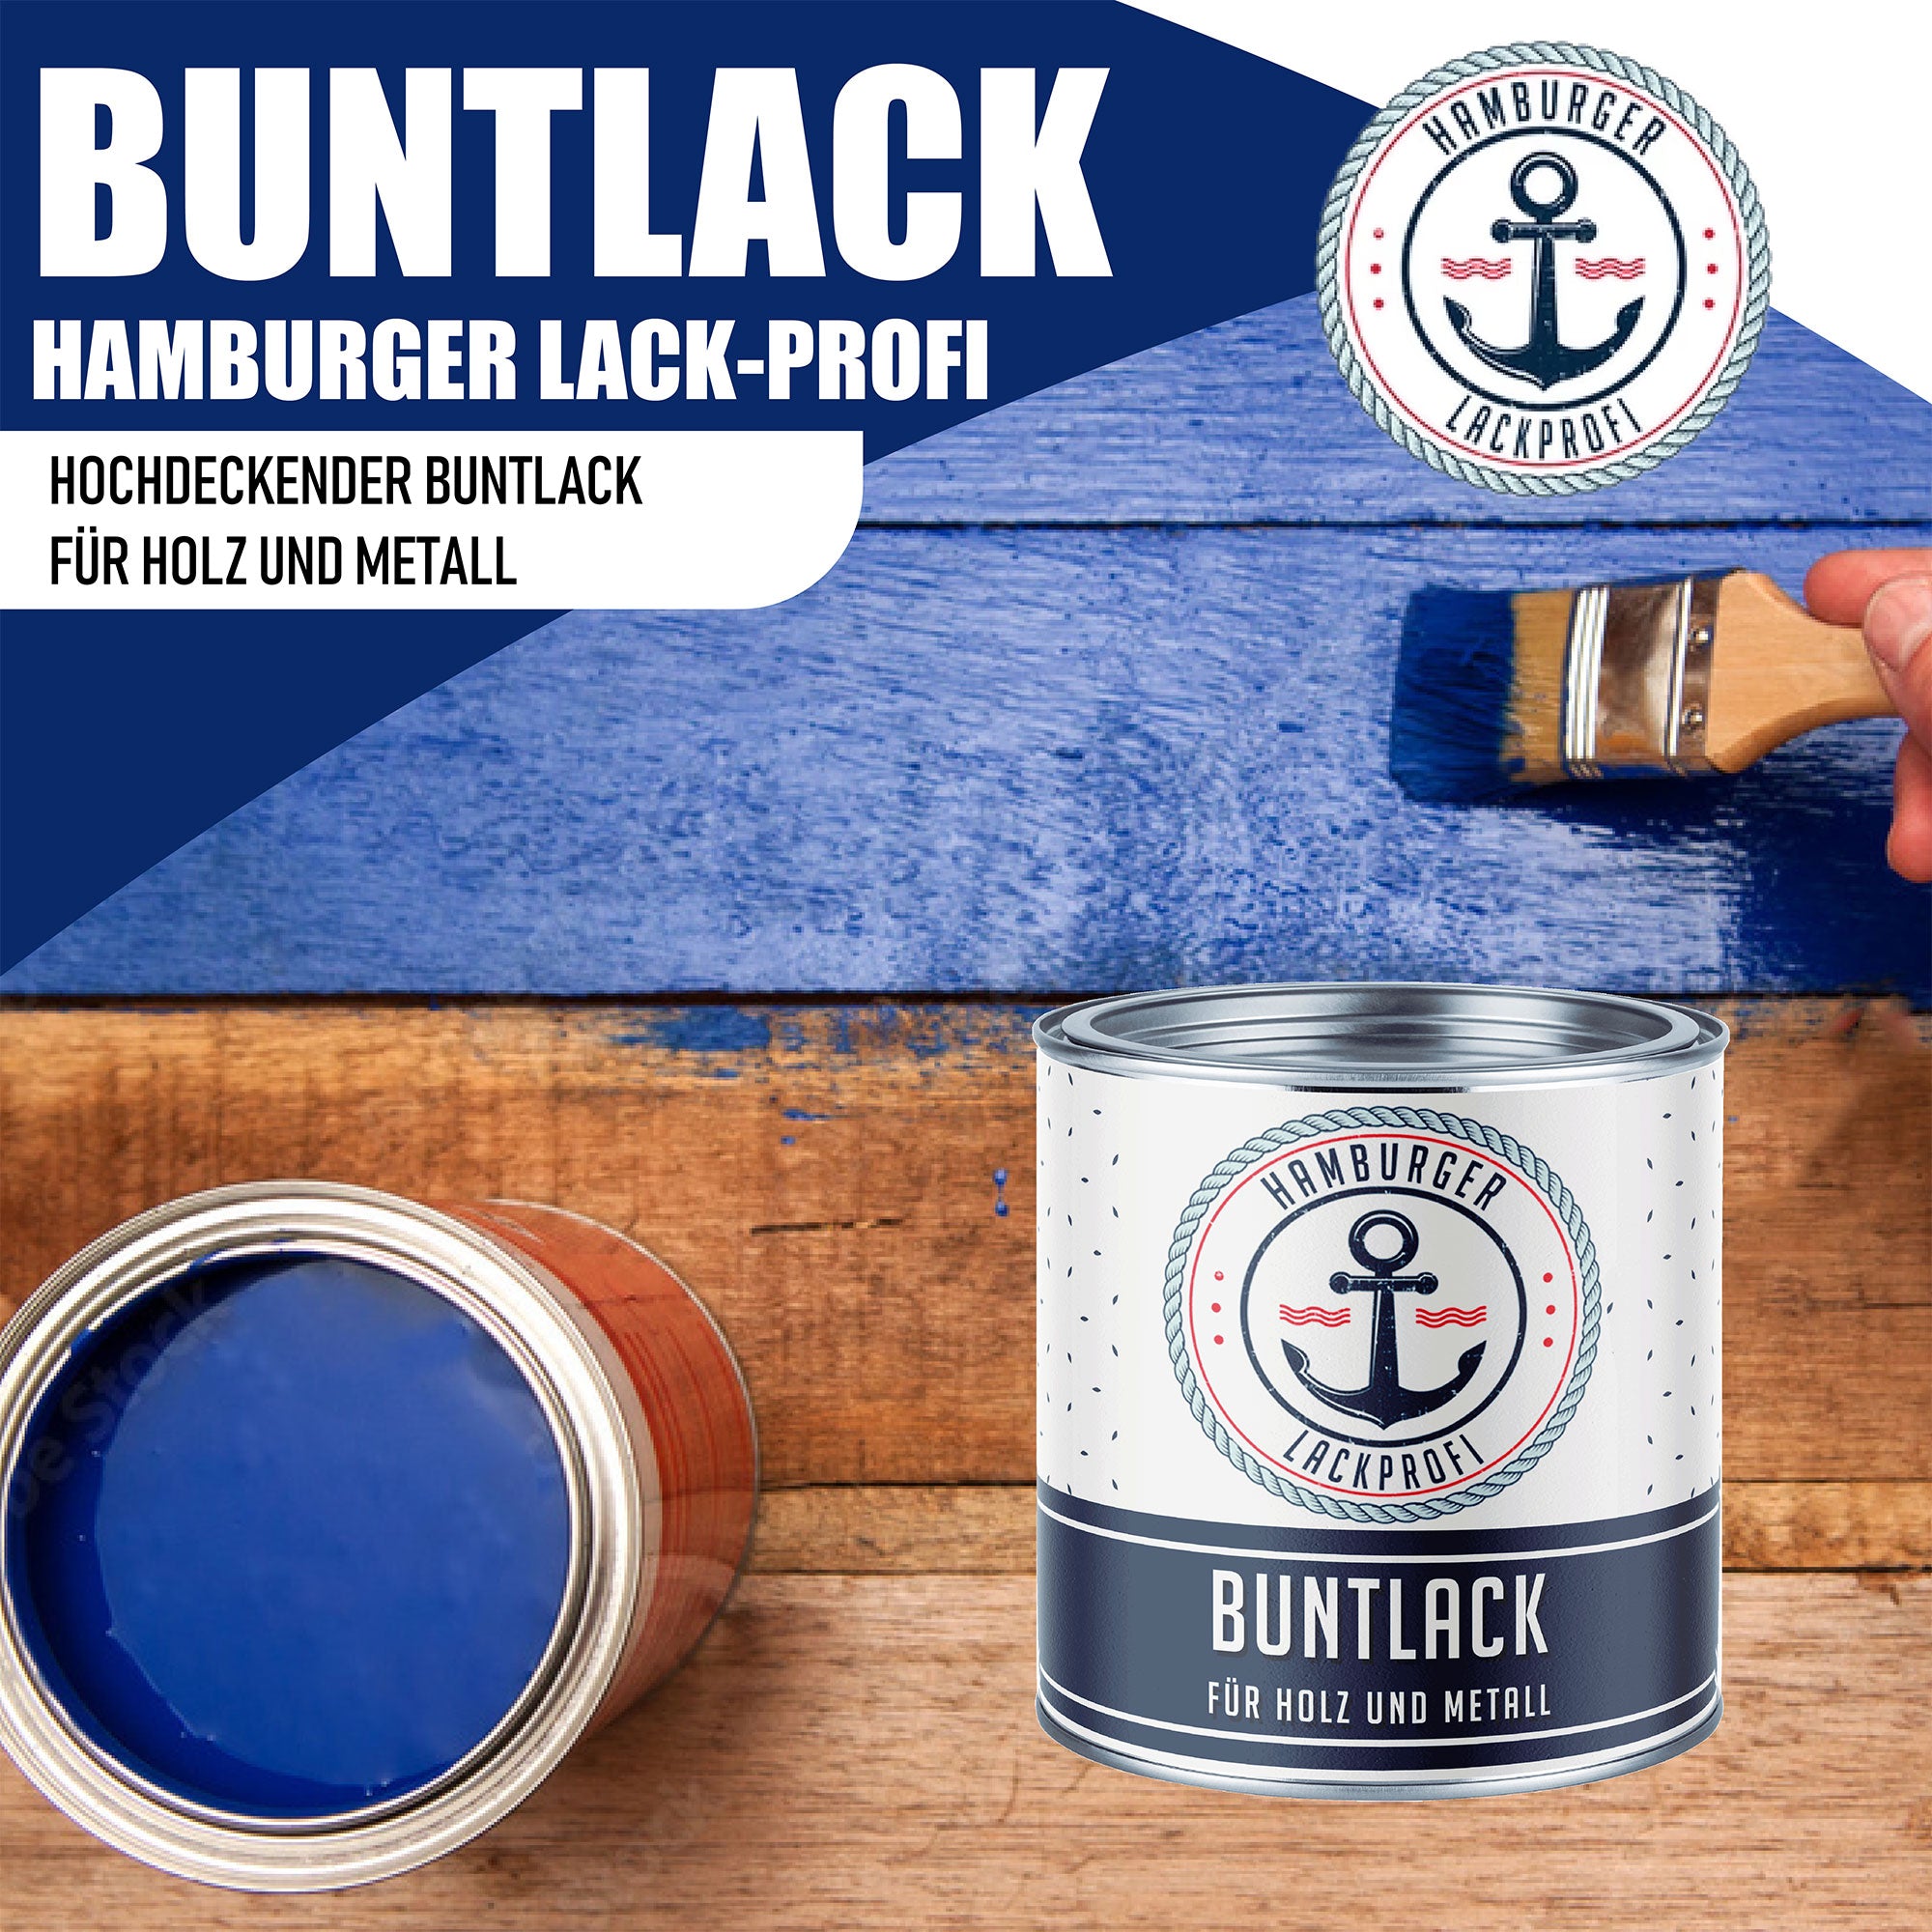 Hamburger Lack-Profi Buntlack Schwarzbraun RAL 8022 - Robuster Kunstharzlack